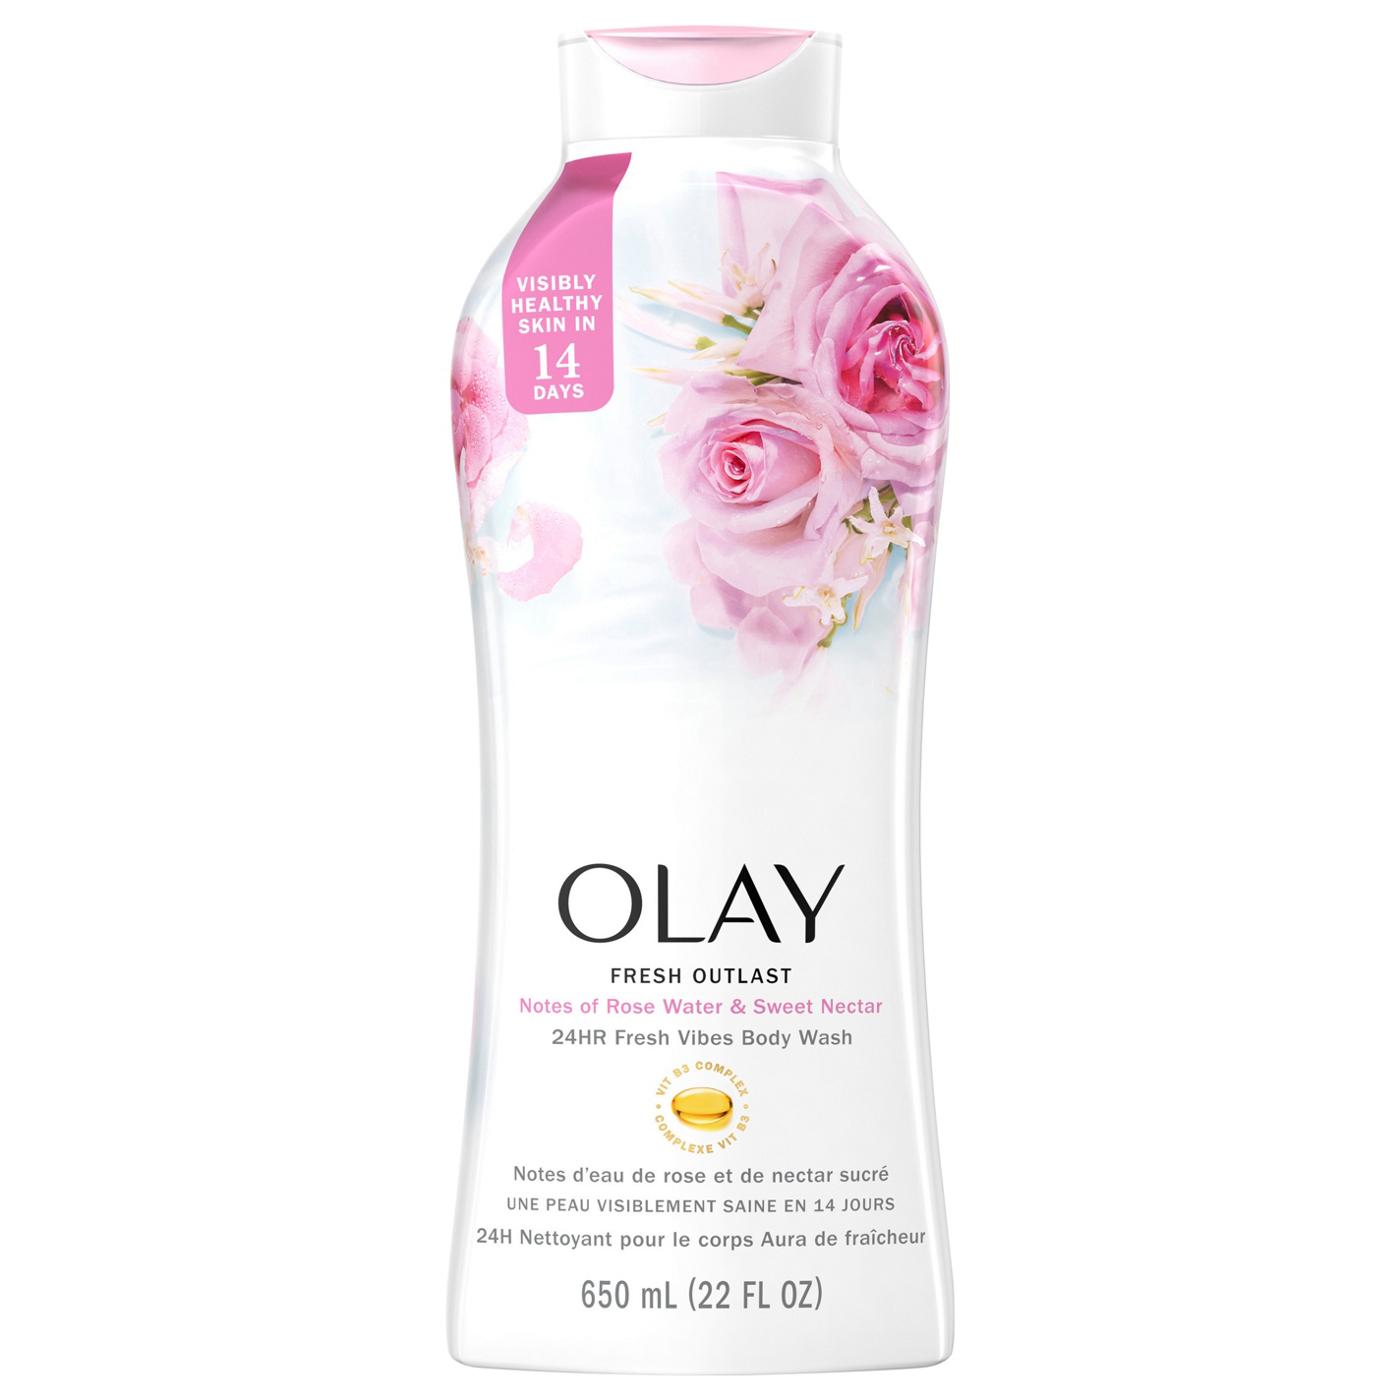 Olay Fresh Outlast Body Wash - Rose Water & Sweet Nectar; image 3 of 3